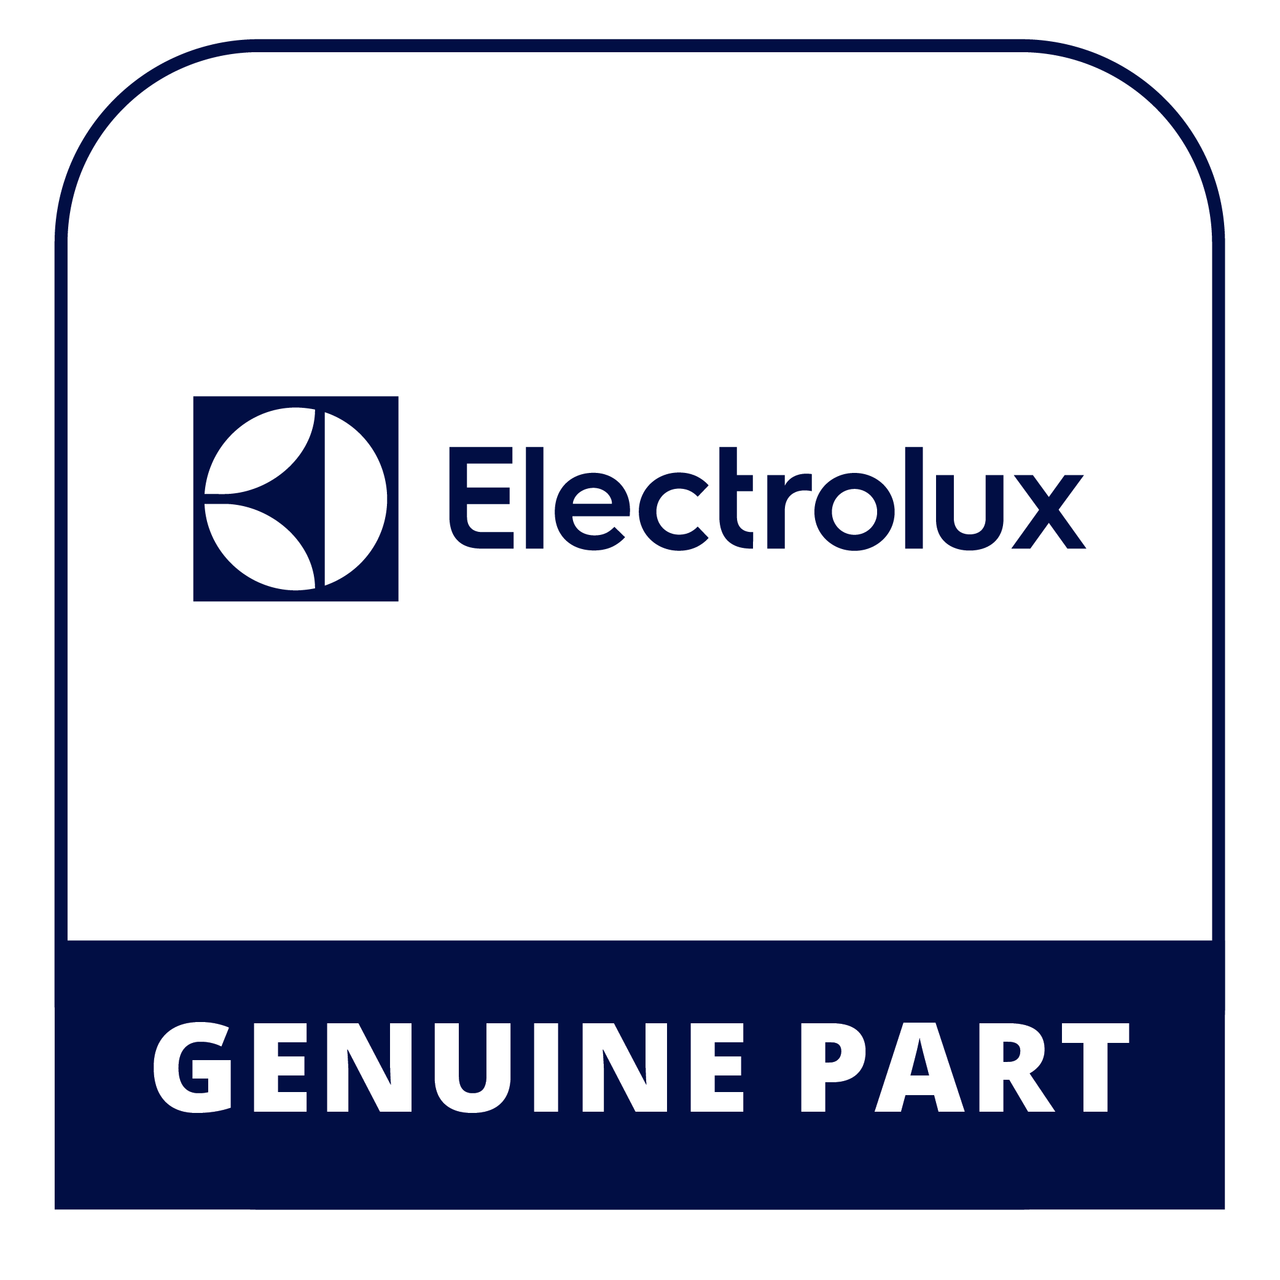 Frigidaire - Electrolux 134587200 Asmy-Pkg Spacer-Sho - Genuine Electrolux Part